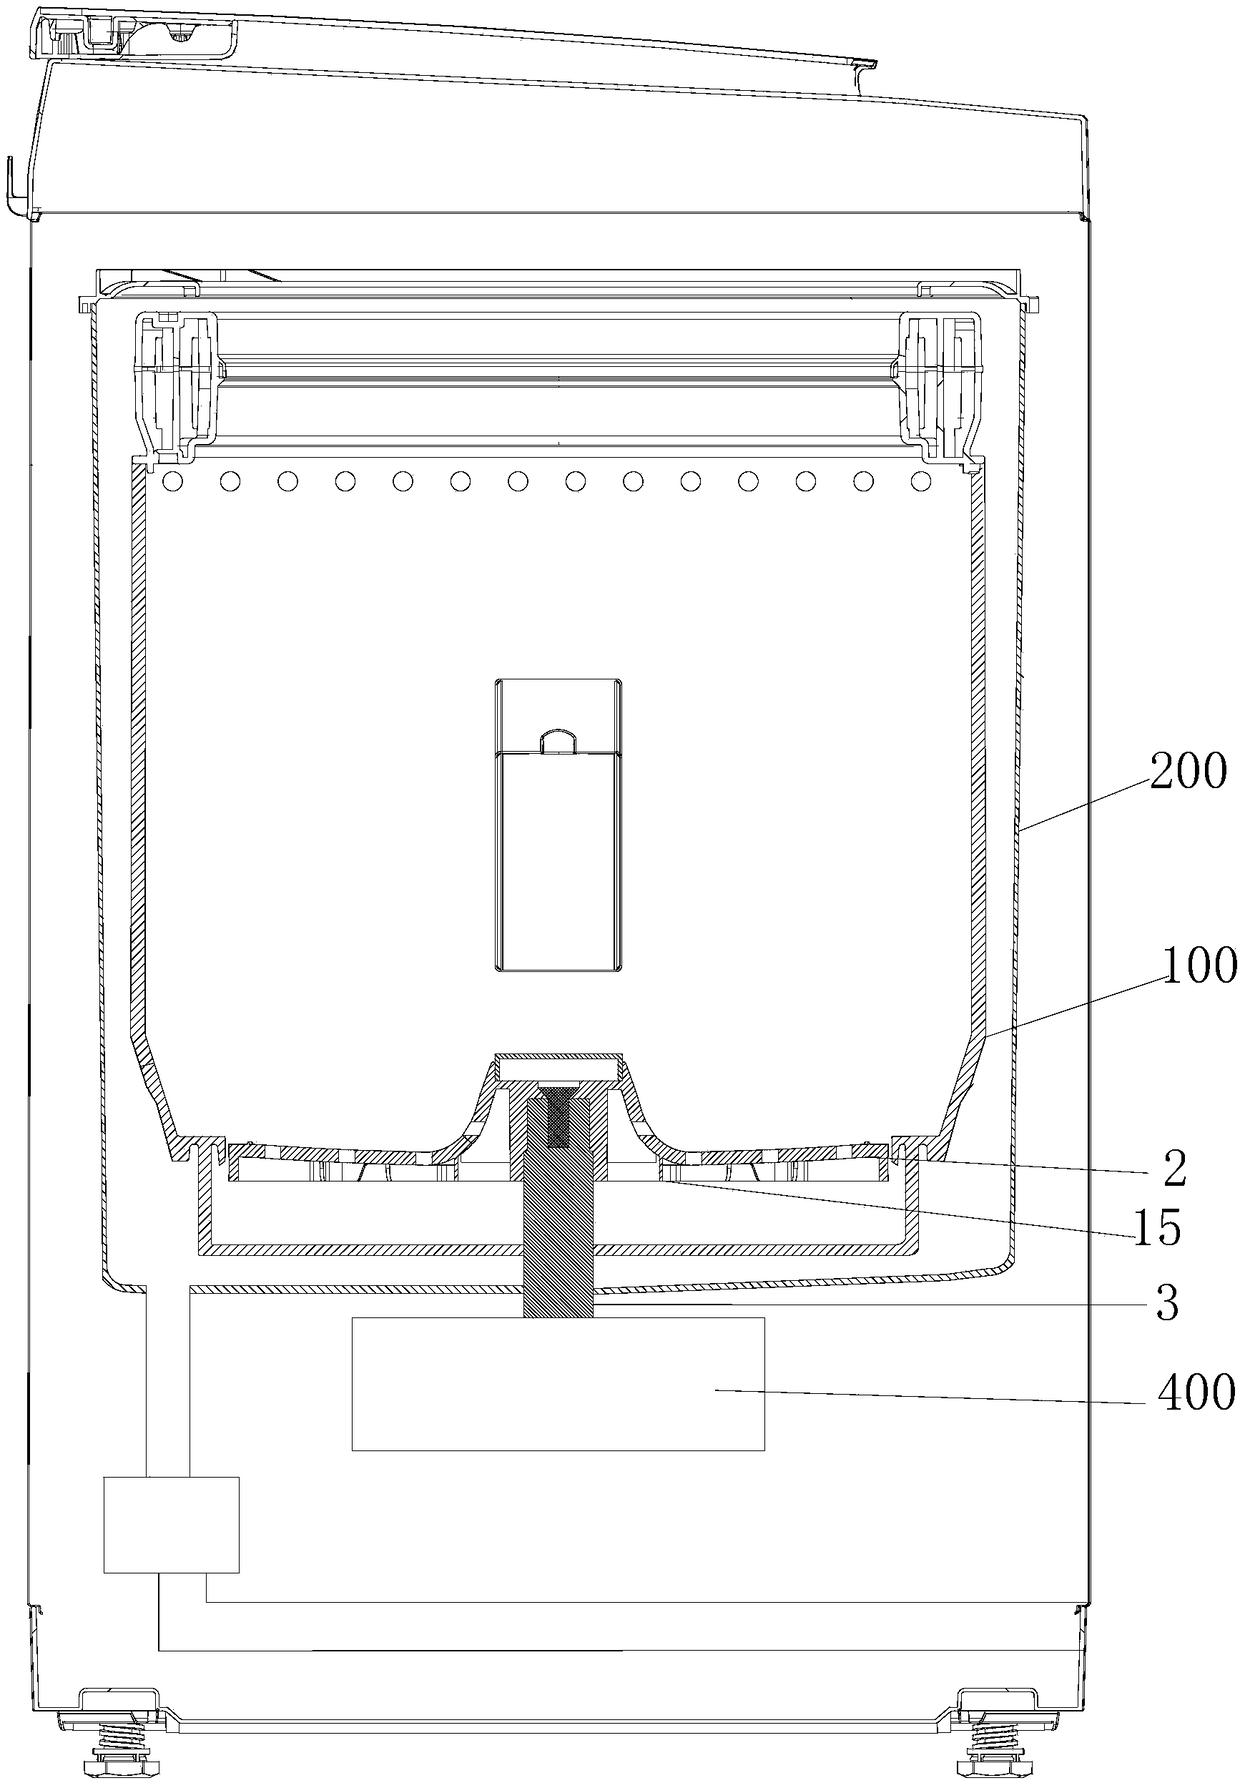 Pulsator structure and washing machine